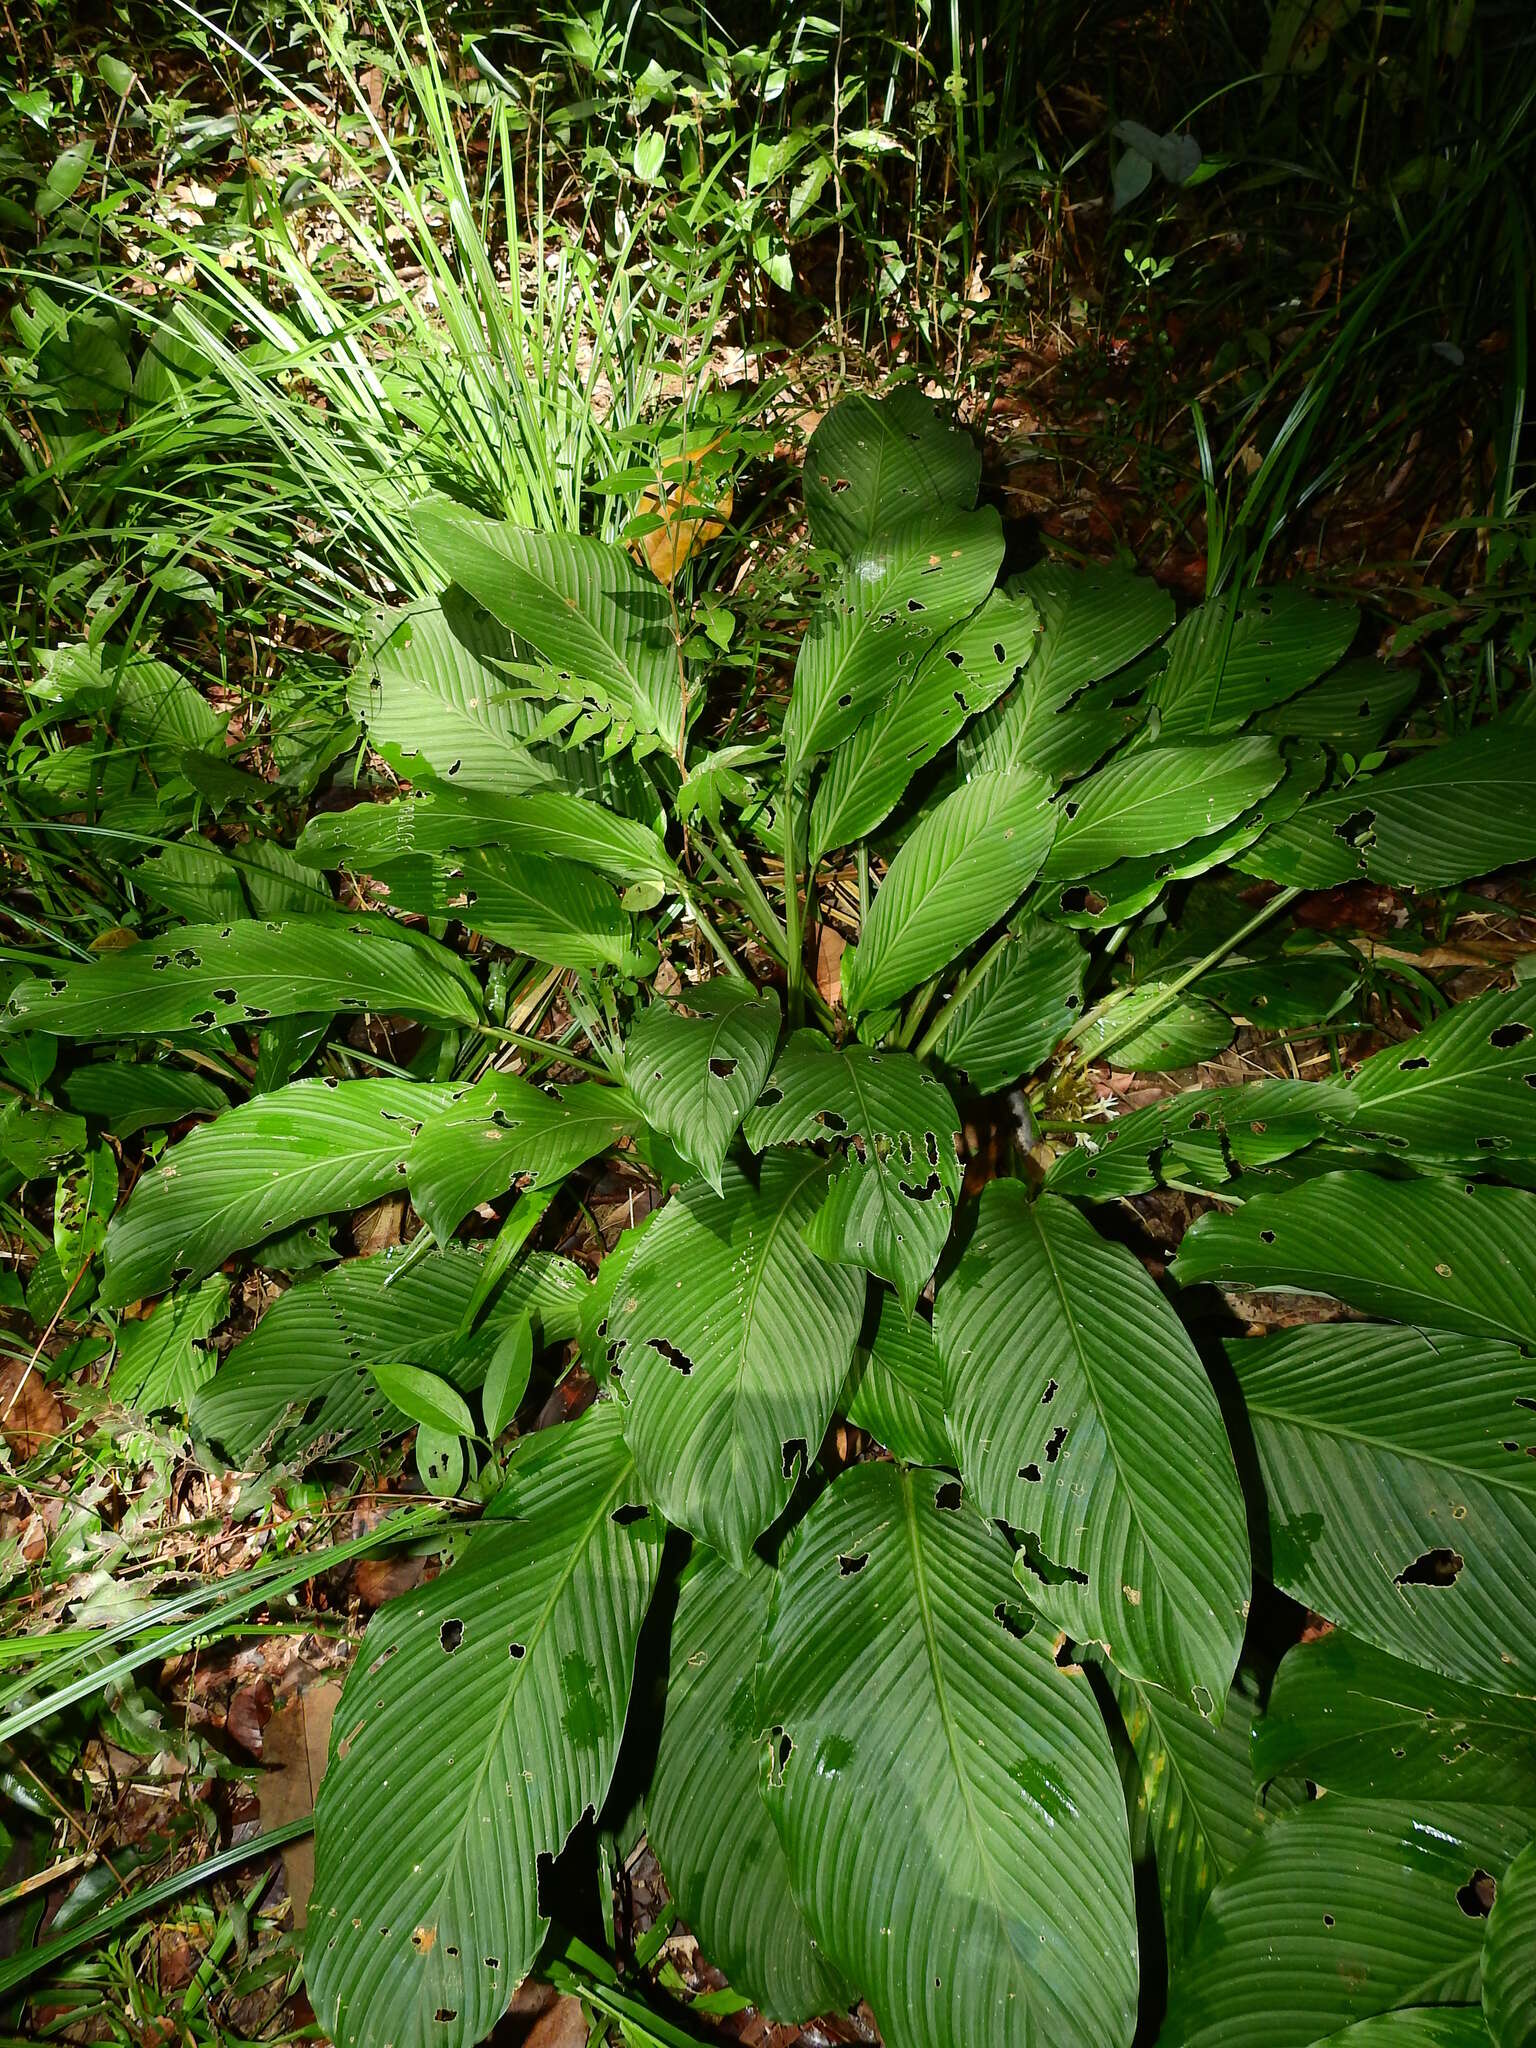 Image of Goeppertia propinqua (Poepp. & Endl.) Borchs. & S. Suárez